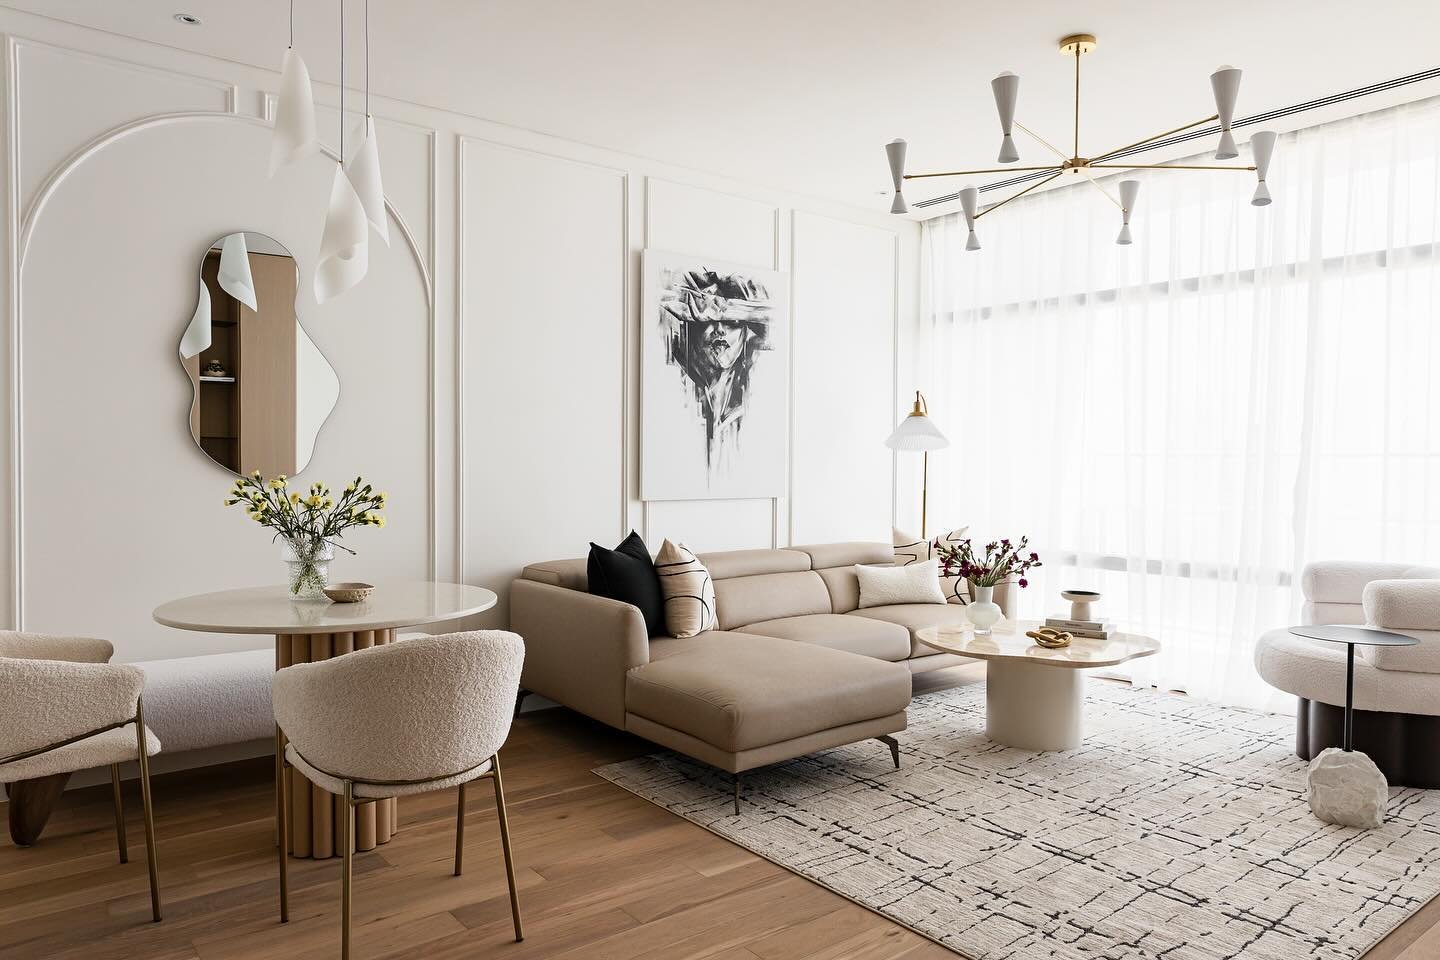 Living Room Drop 

Pictures: @sergeinekrasov 

#InteriorDesign #DubaiInteriors #ModernElegance #OrganicDesign #HomeDecor #DiningRoomInspo #SpaceOptimization #DesignDetails #ArchMolding #MirrorMagic #SmallSpaceDesign #ElegantLiving #HomeStyling #Dubai